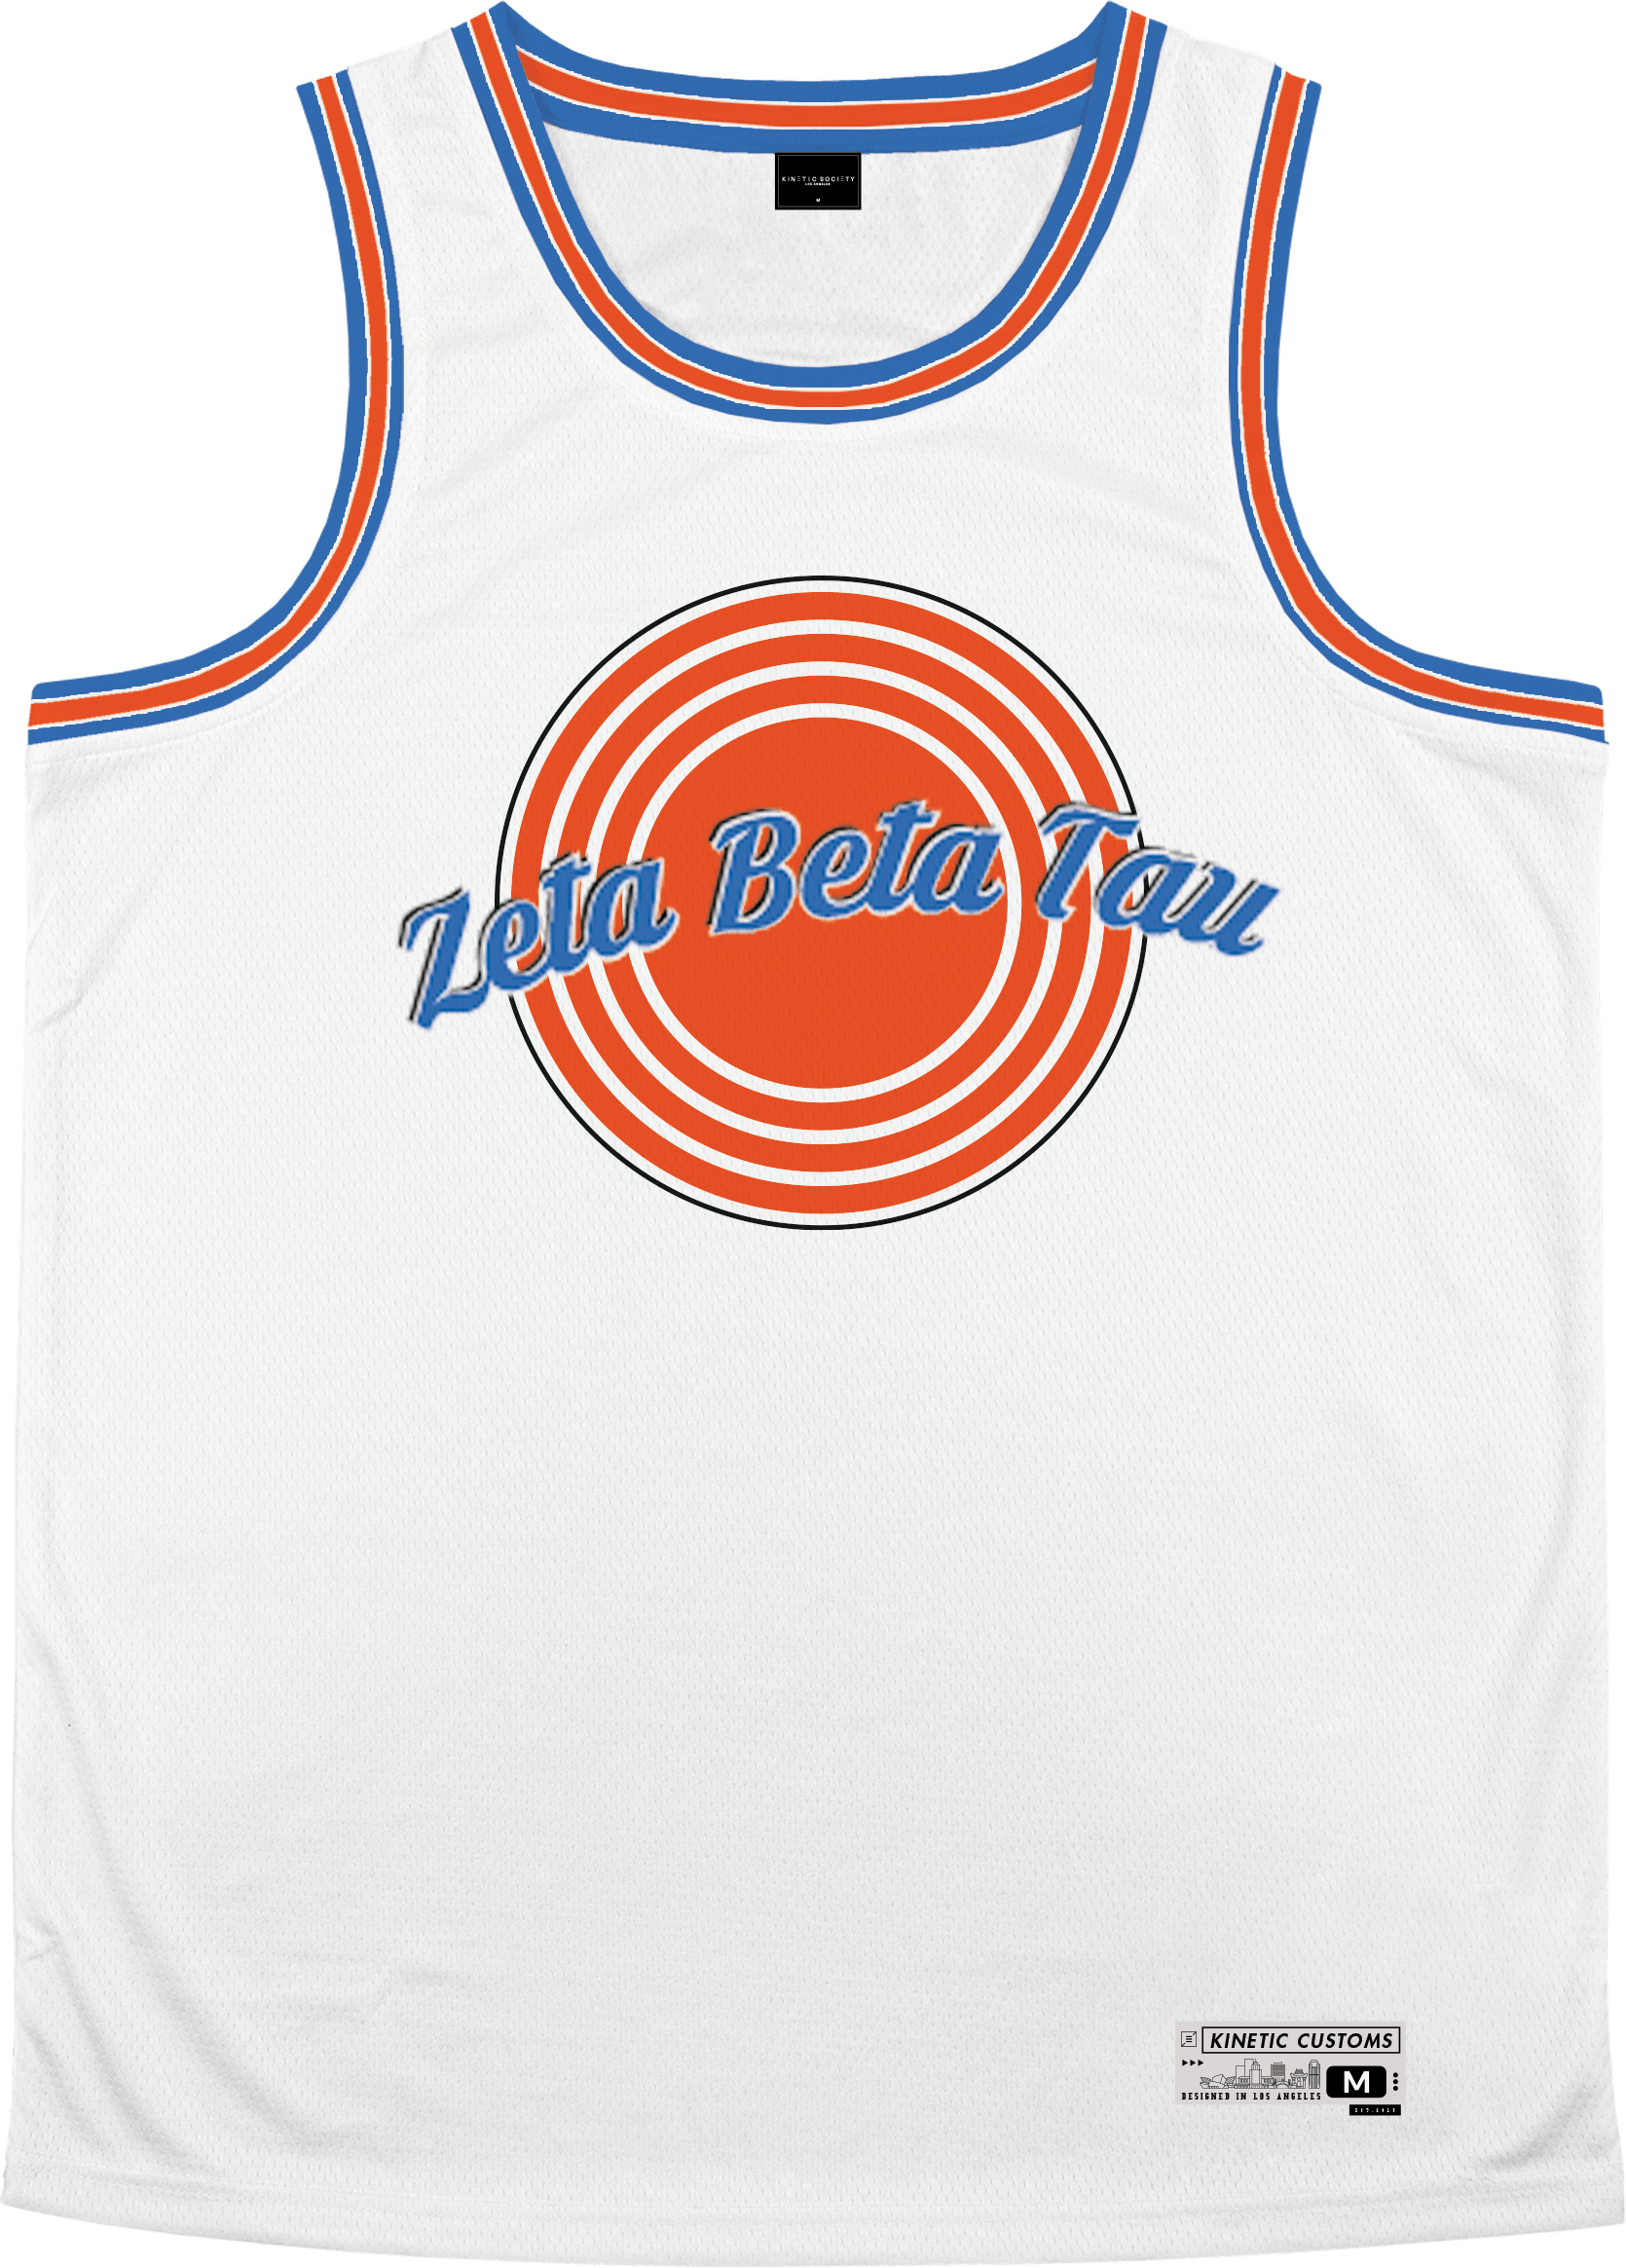 Zeta Beta Tau - Vintage Basketball Jersey Premium Basketball Kinetic Society LLC 